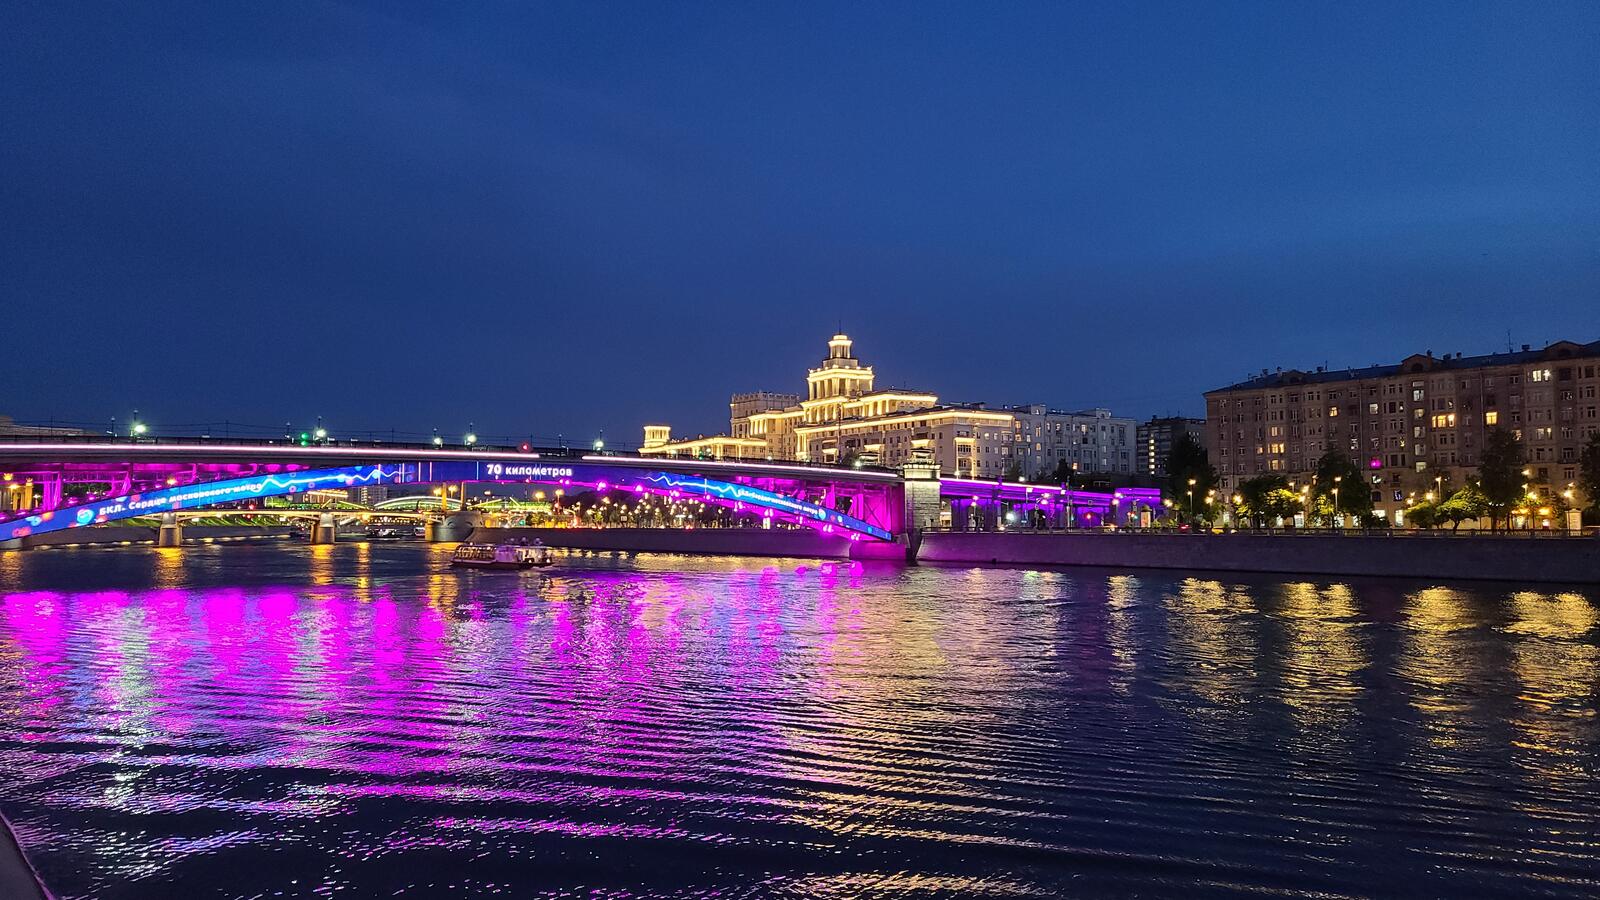 Free photo A night bridge with multicolored neon lighting